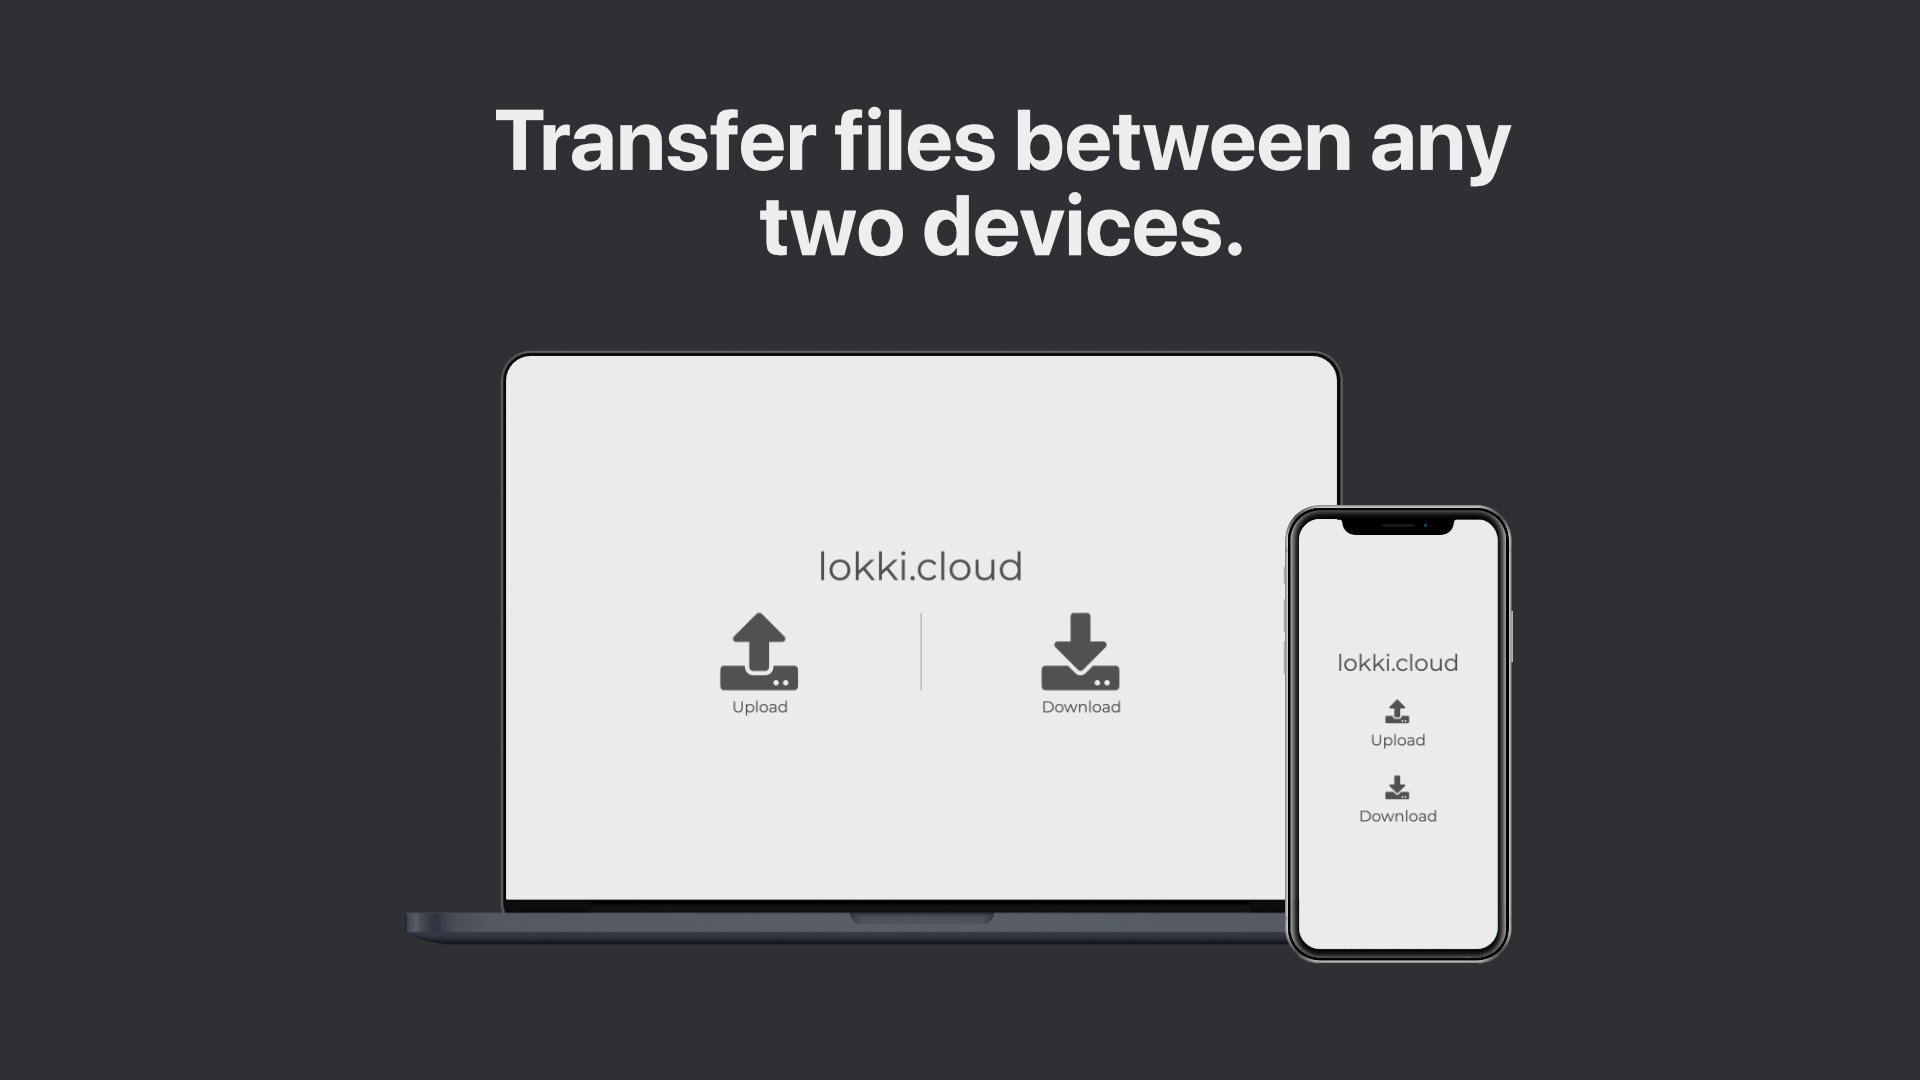 Find detailed information about lokki.cloud